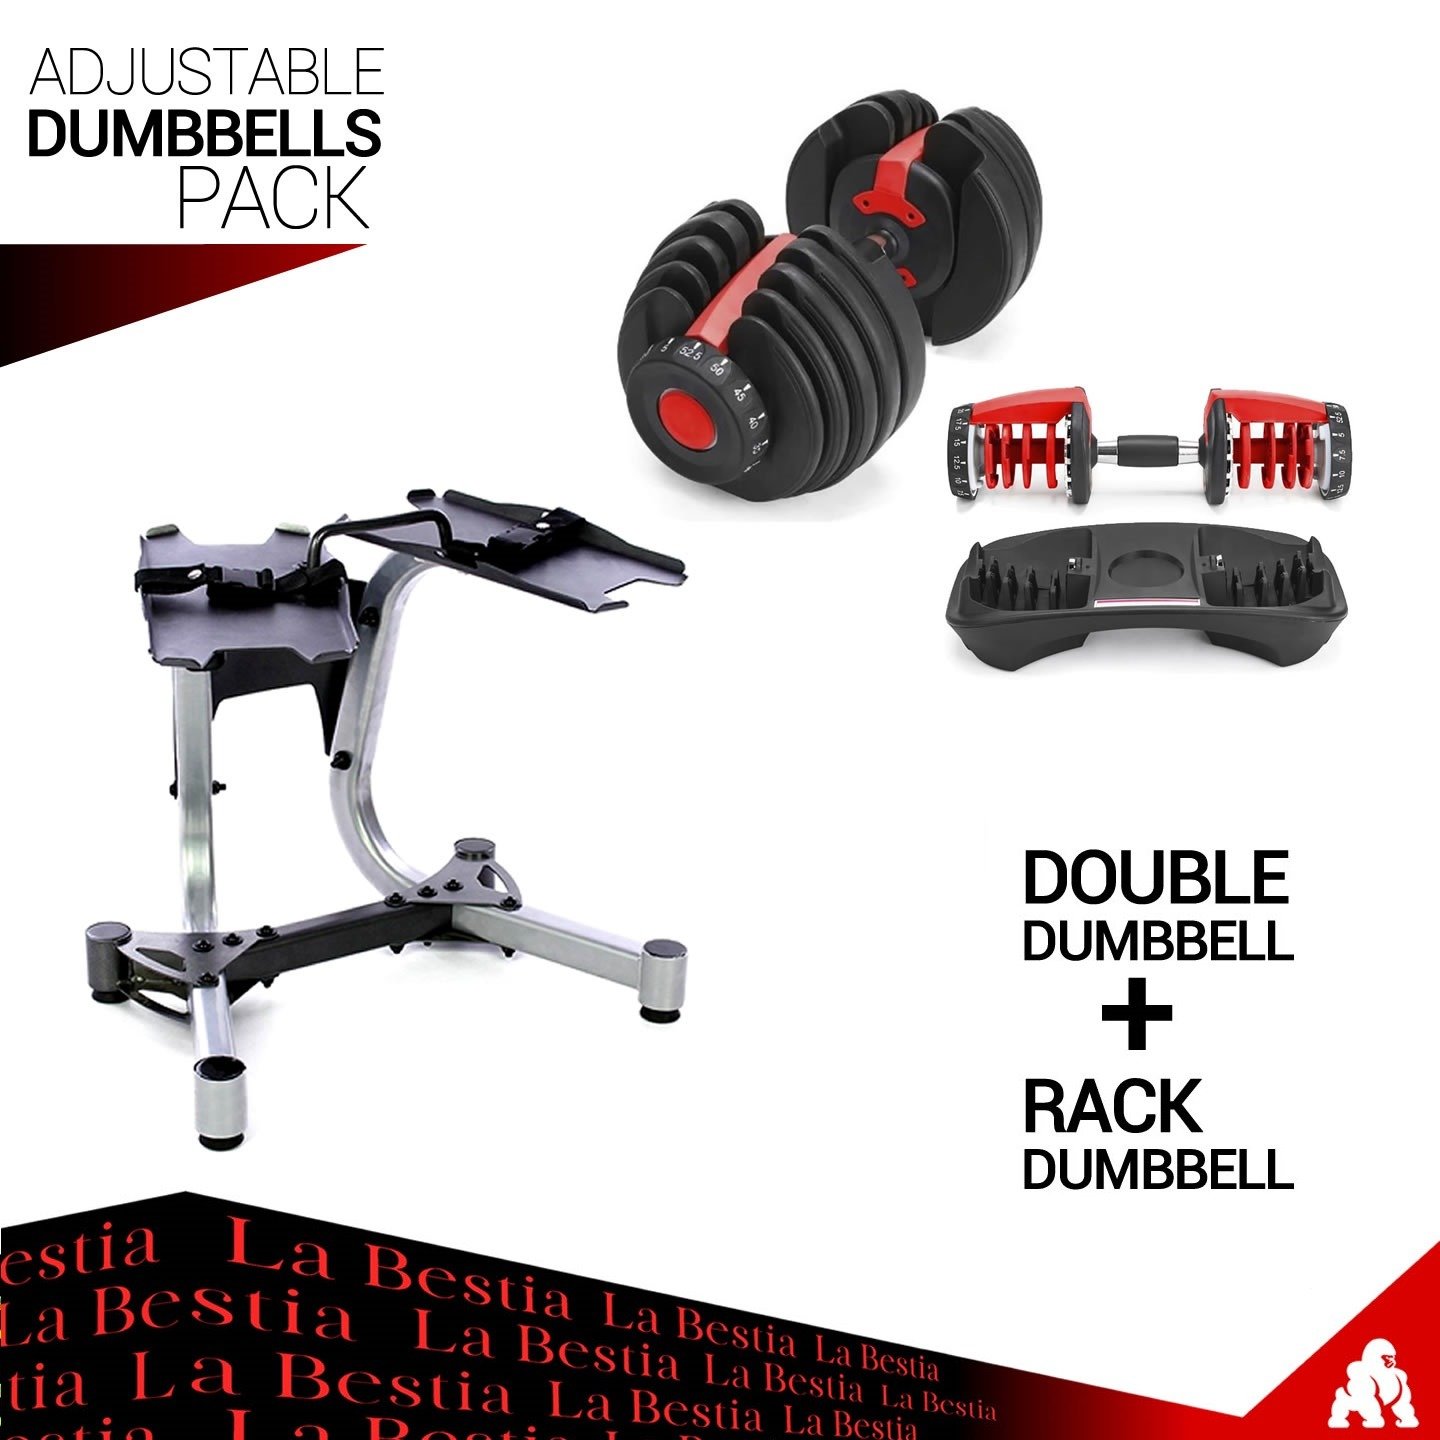 Adjustable Dumbbells Pack (Par de Mancuernas Regulables + Rack